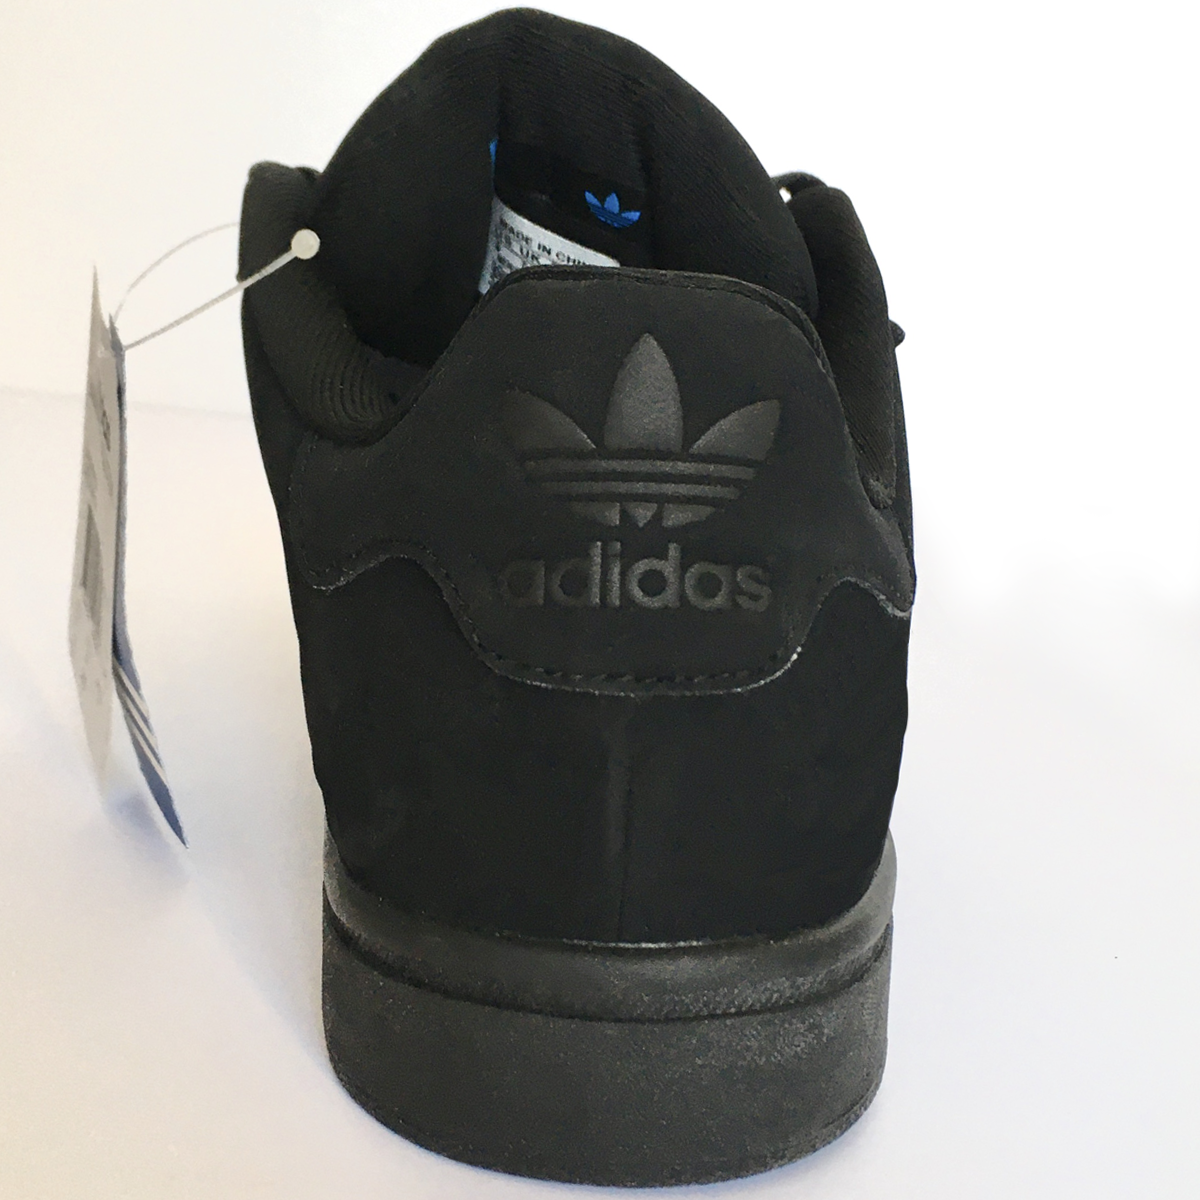 Adidas Bankment Evolution black 5